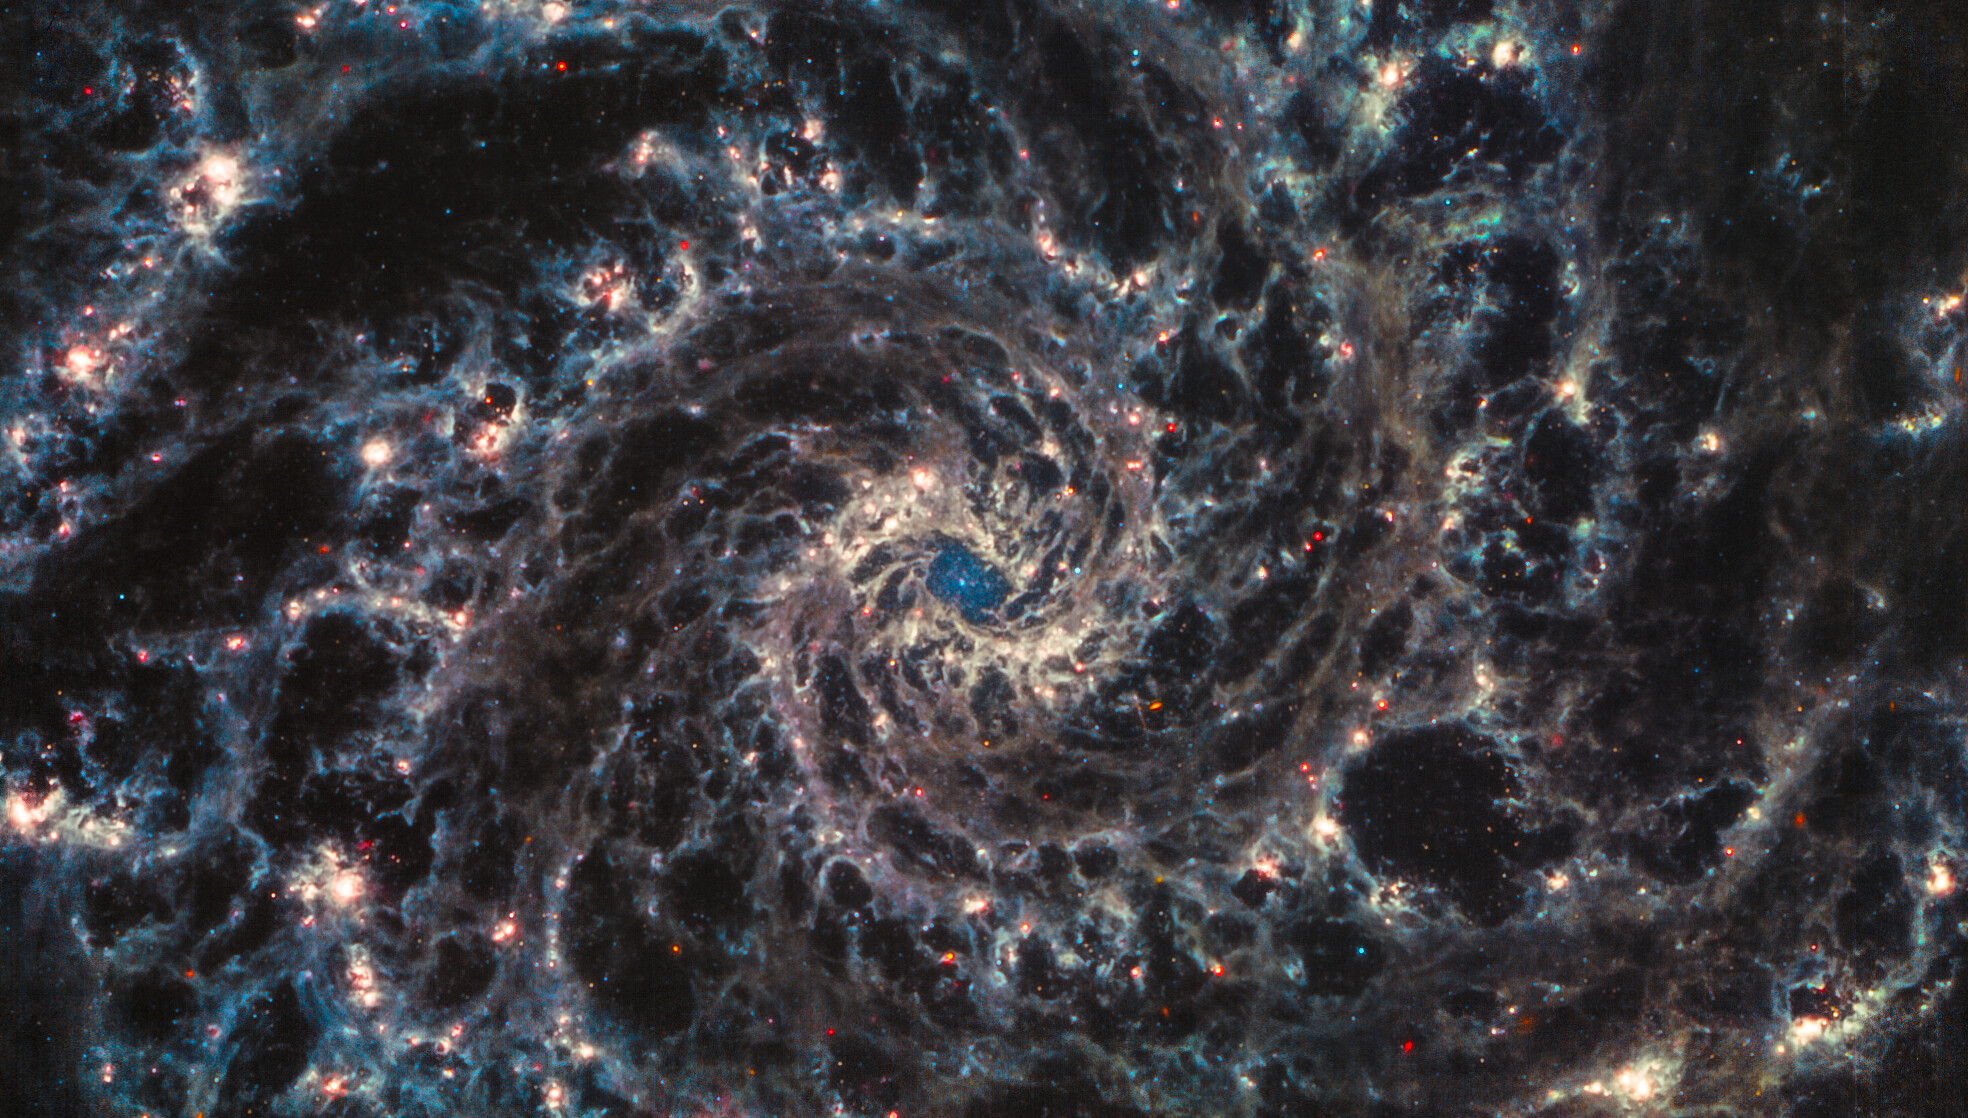 a swirling dark galaxy captured in infrared light